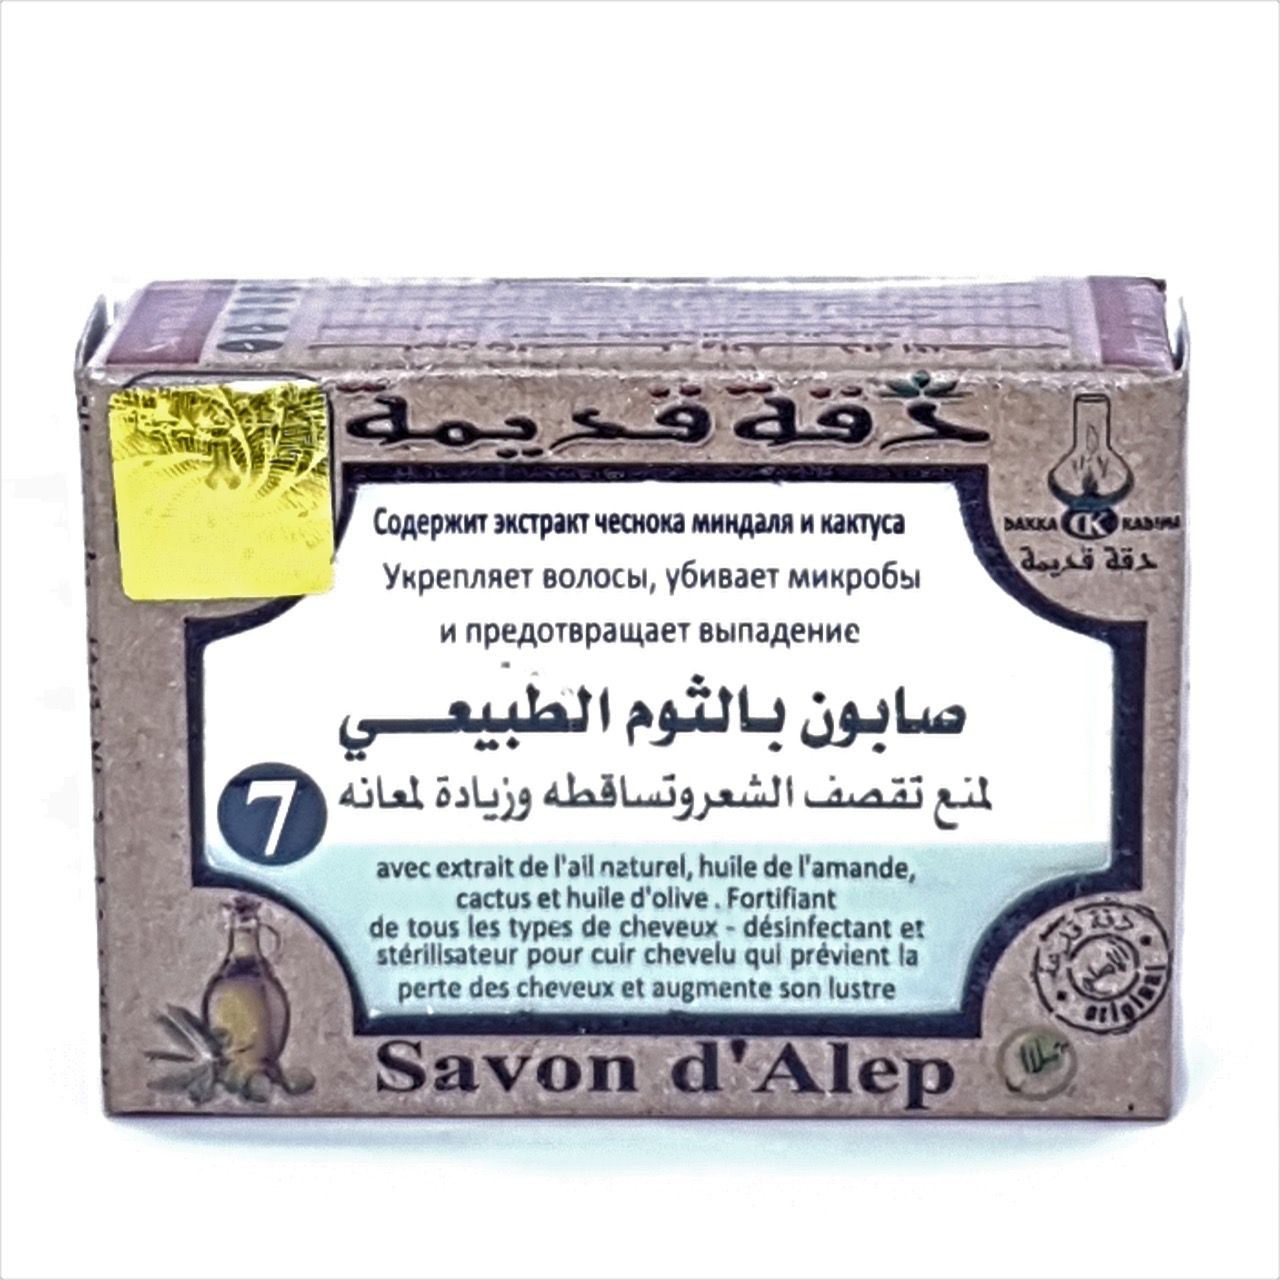 Savon d'Alep n°7 ail, huiles d'amande et d'olive, cactus 100gr | DAKKA KADIMA